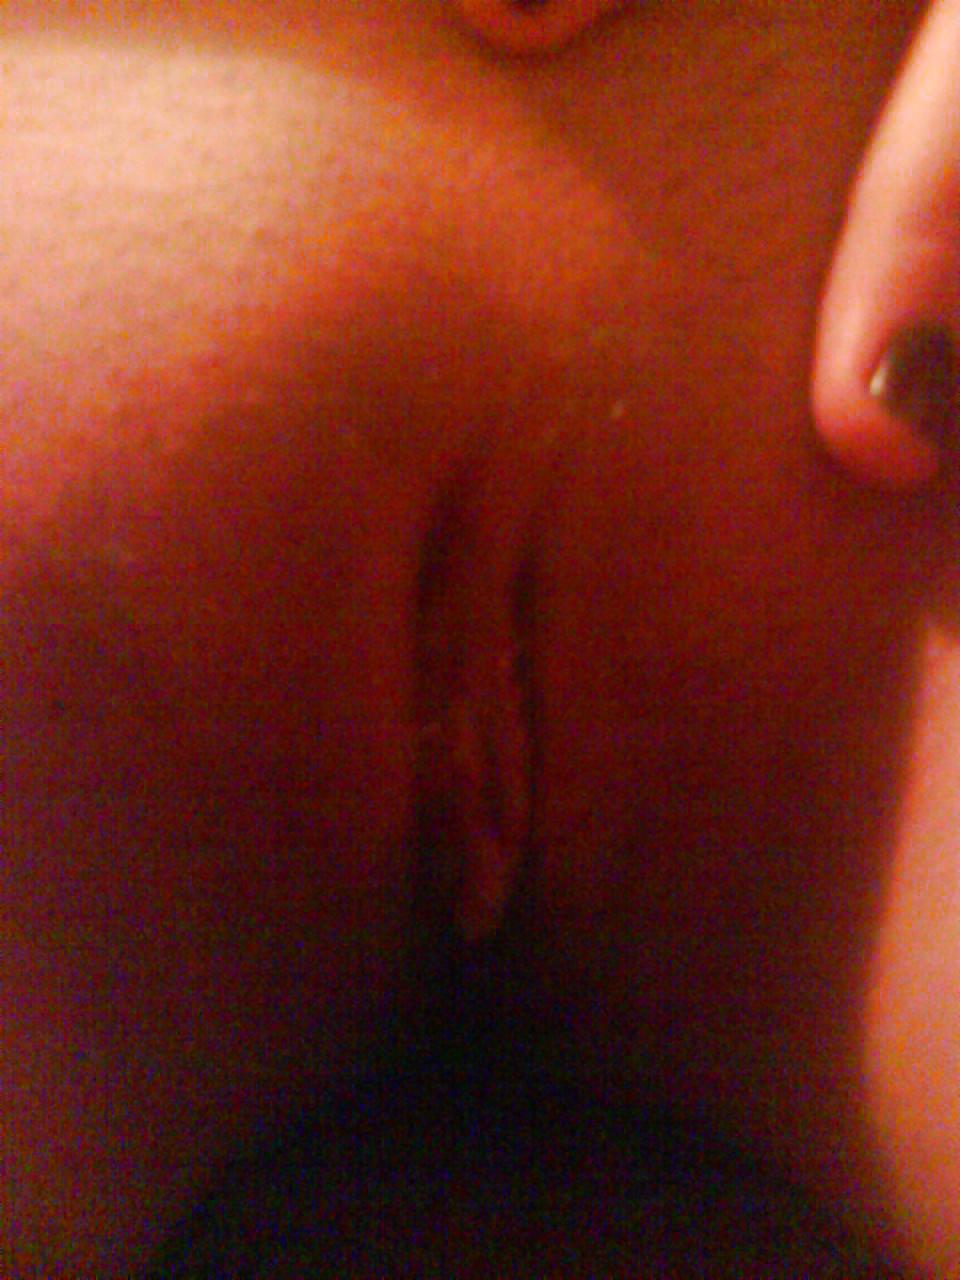 Sex betty boobs image